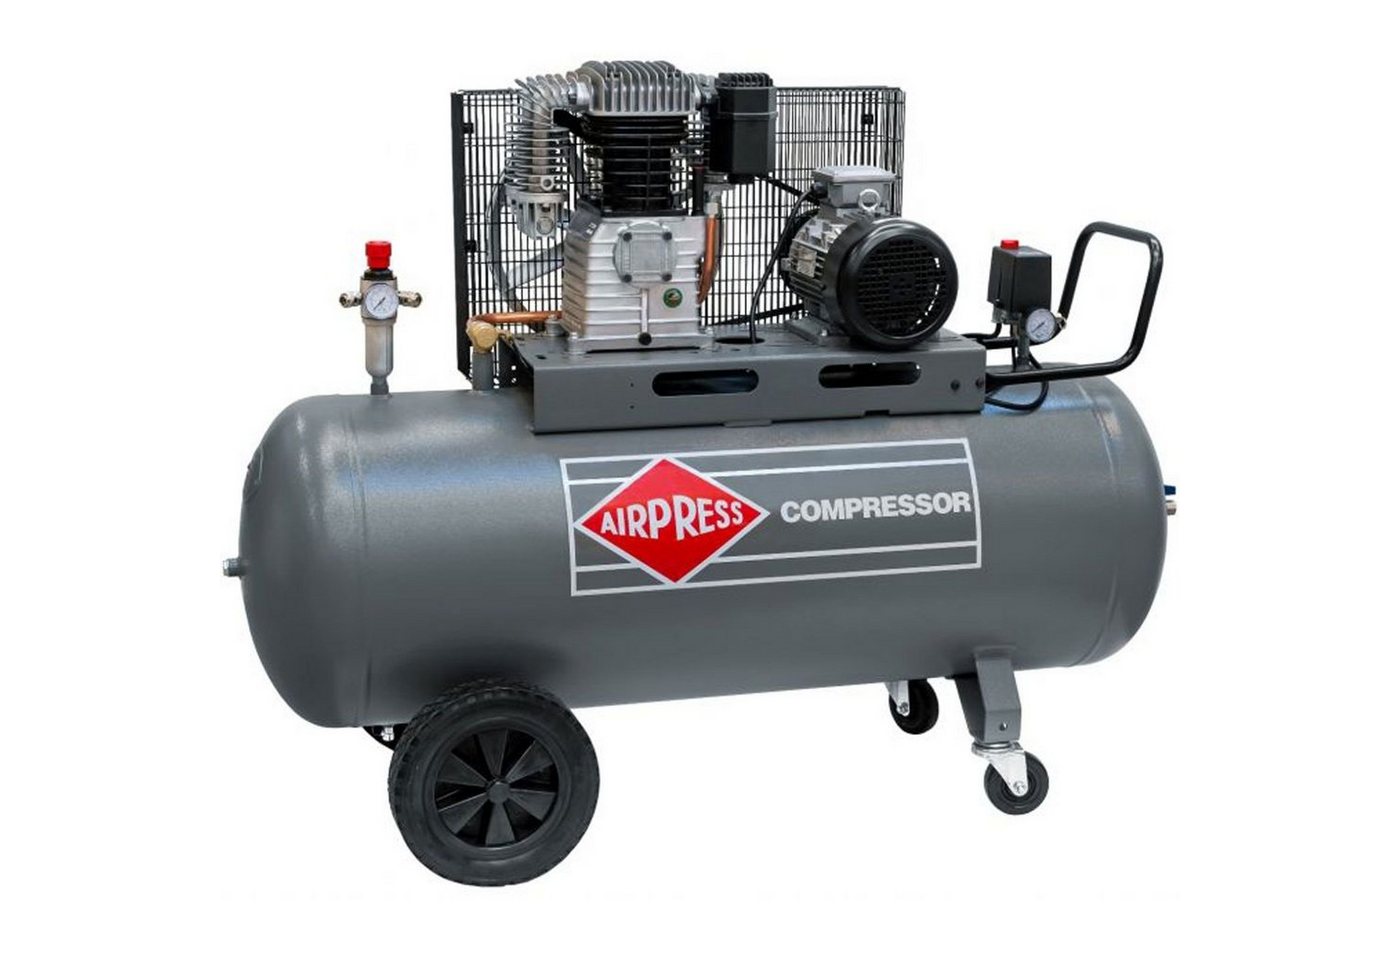 Airpress Kompressor Druckluft- Kompressor 5,5 PS 270 Liter 11 bar HK700-300 Typ 360568, max. 11 bar, 270 l, 1 Stück von Airpress